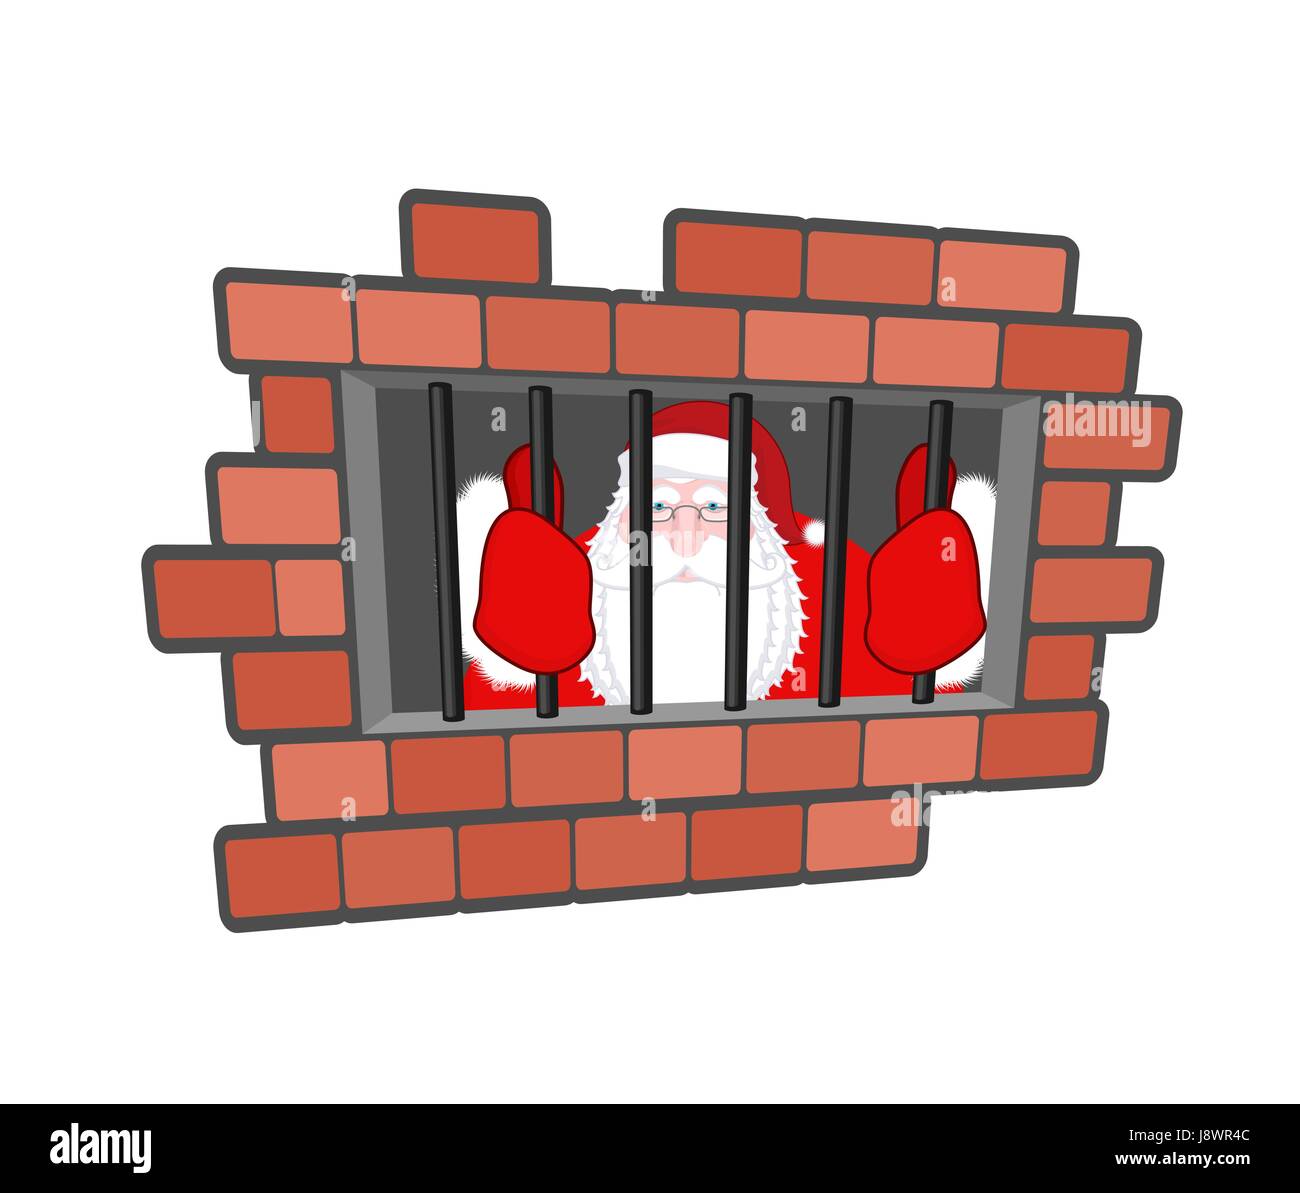 Santa Claus prisoner. Christmas in prison. Window in prison with bars. Bad Santa criminal. New year is canceled. Jail break Stock Vector